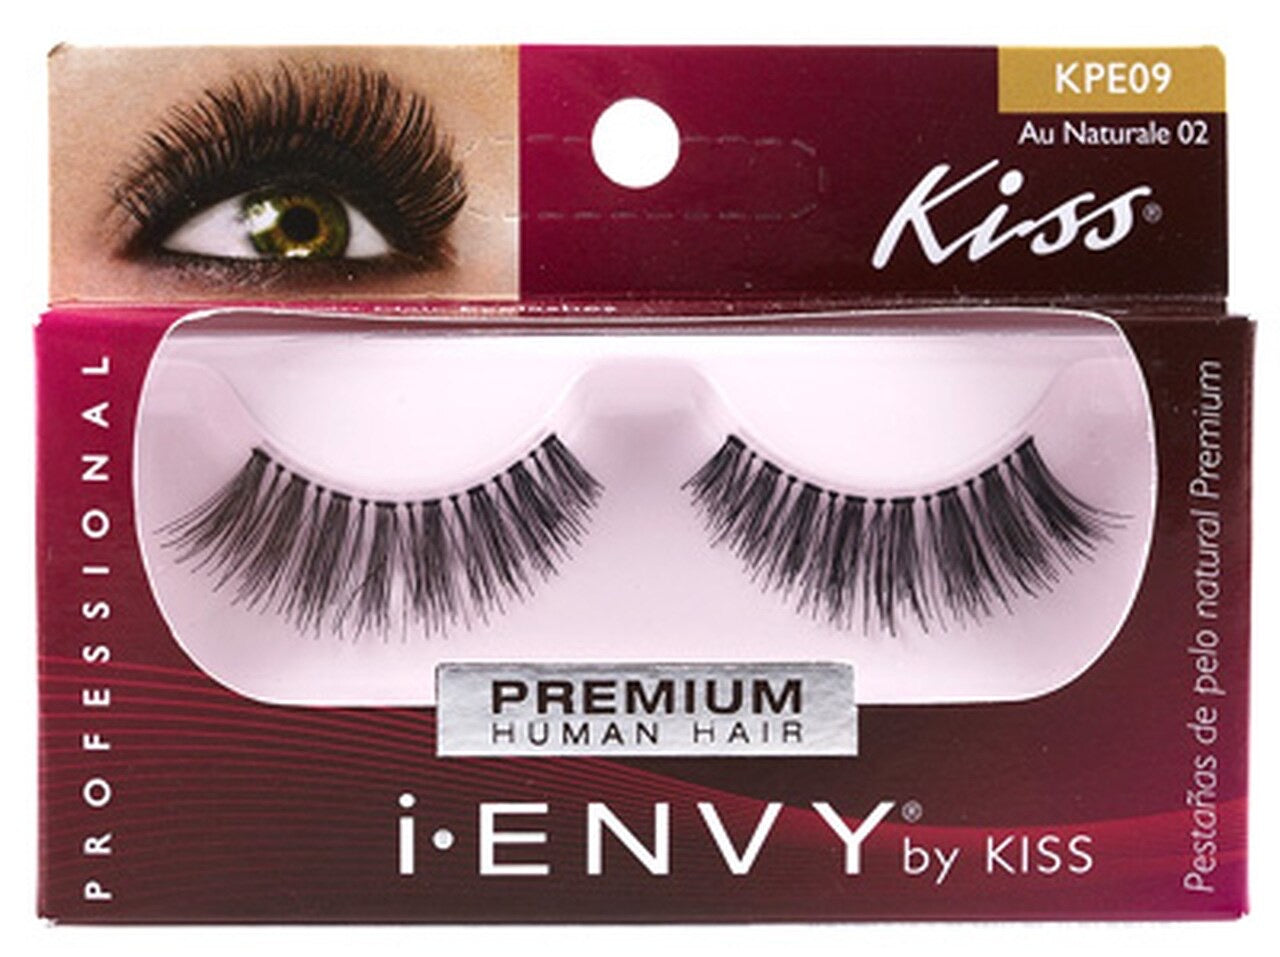 Kiss premium lashes Au naturale Kpe09